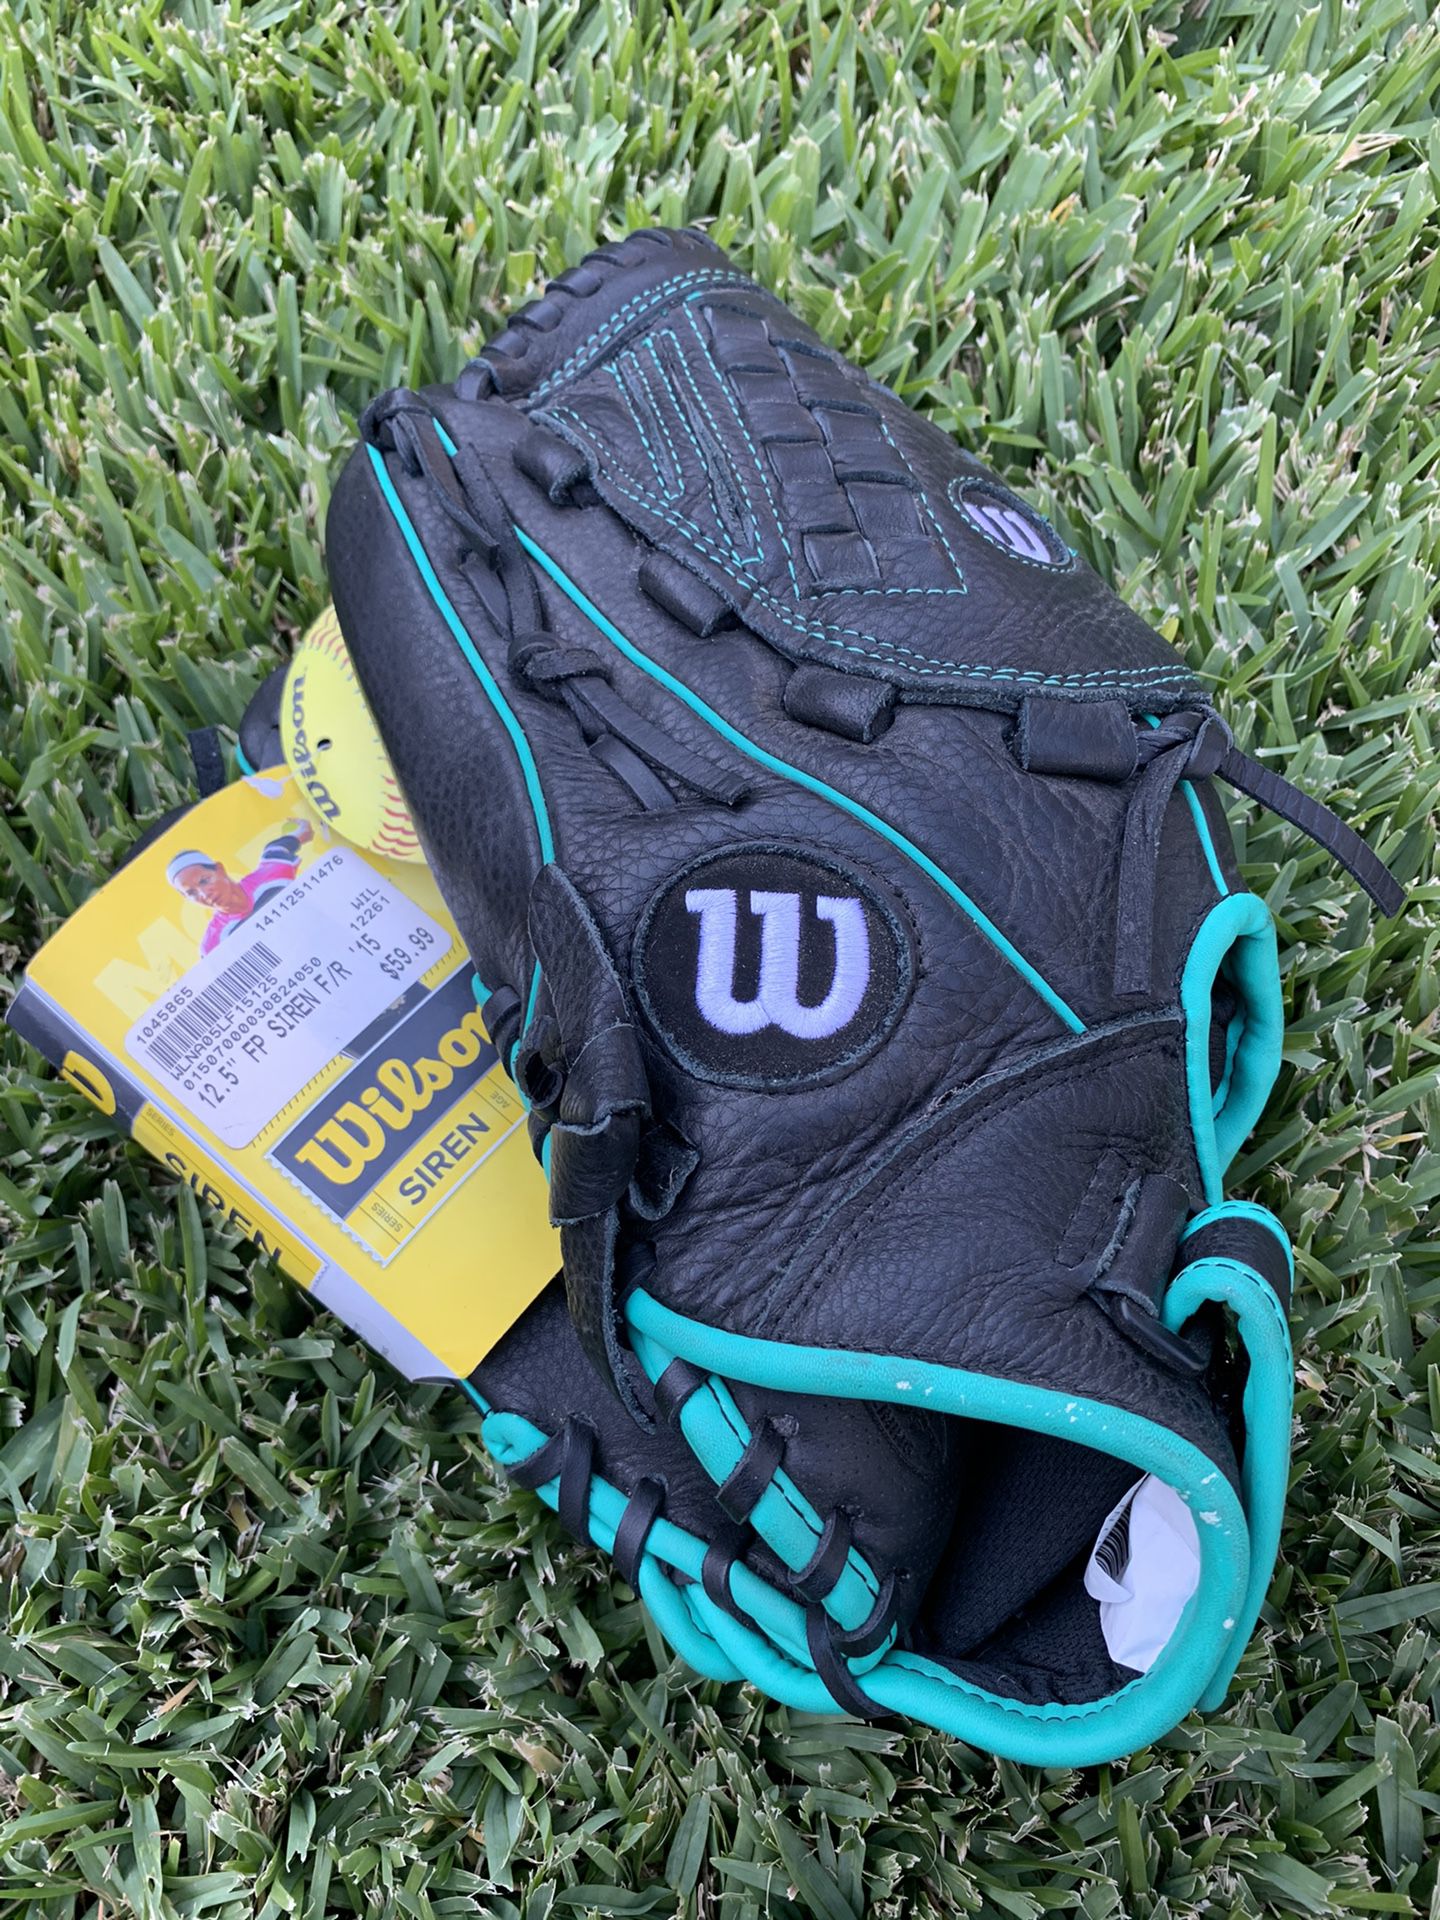 Wilson fastpitch softball glove for lefty